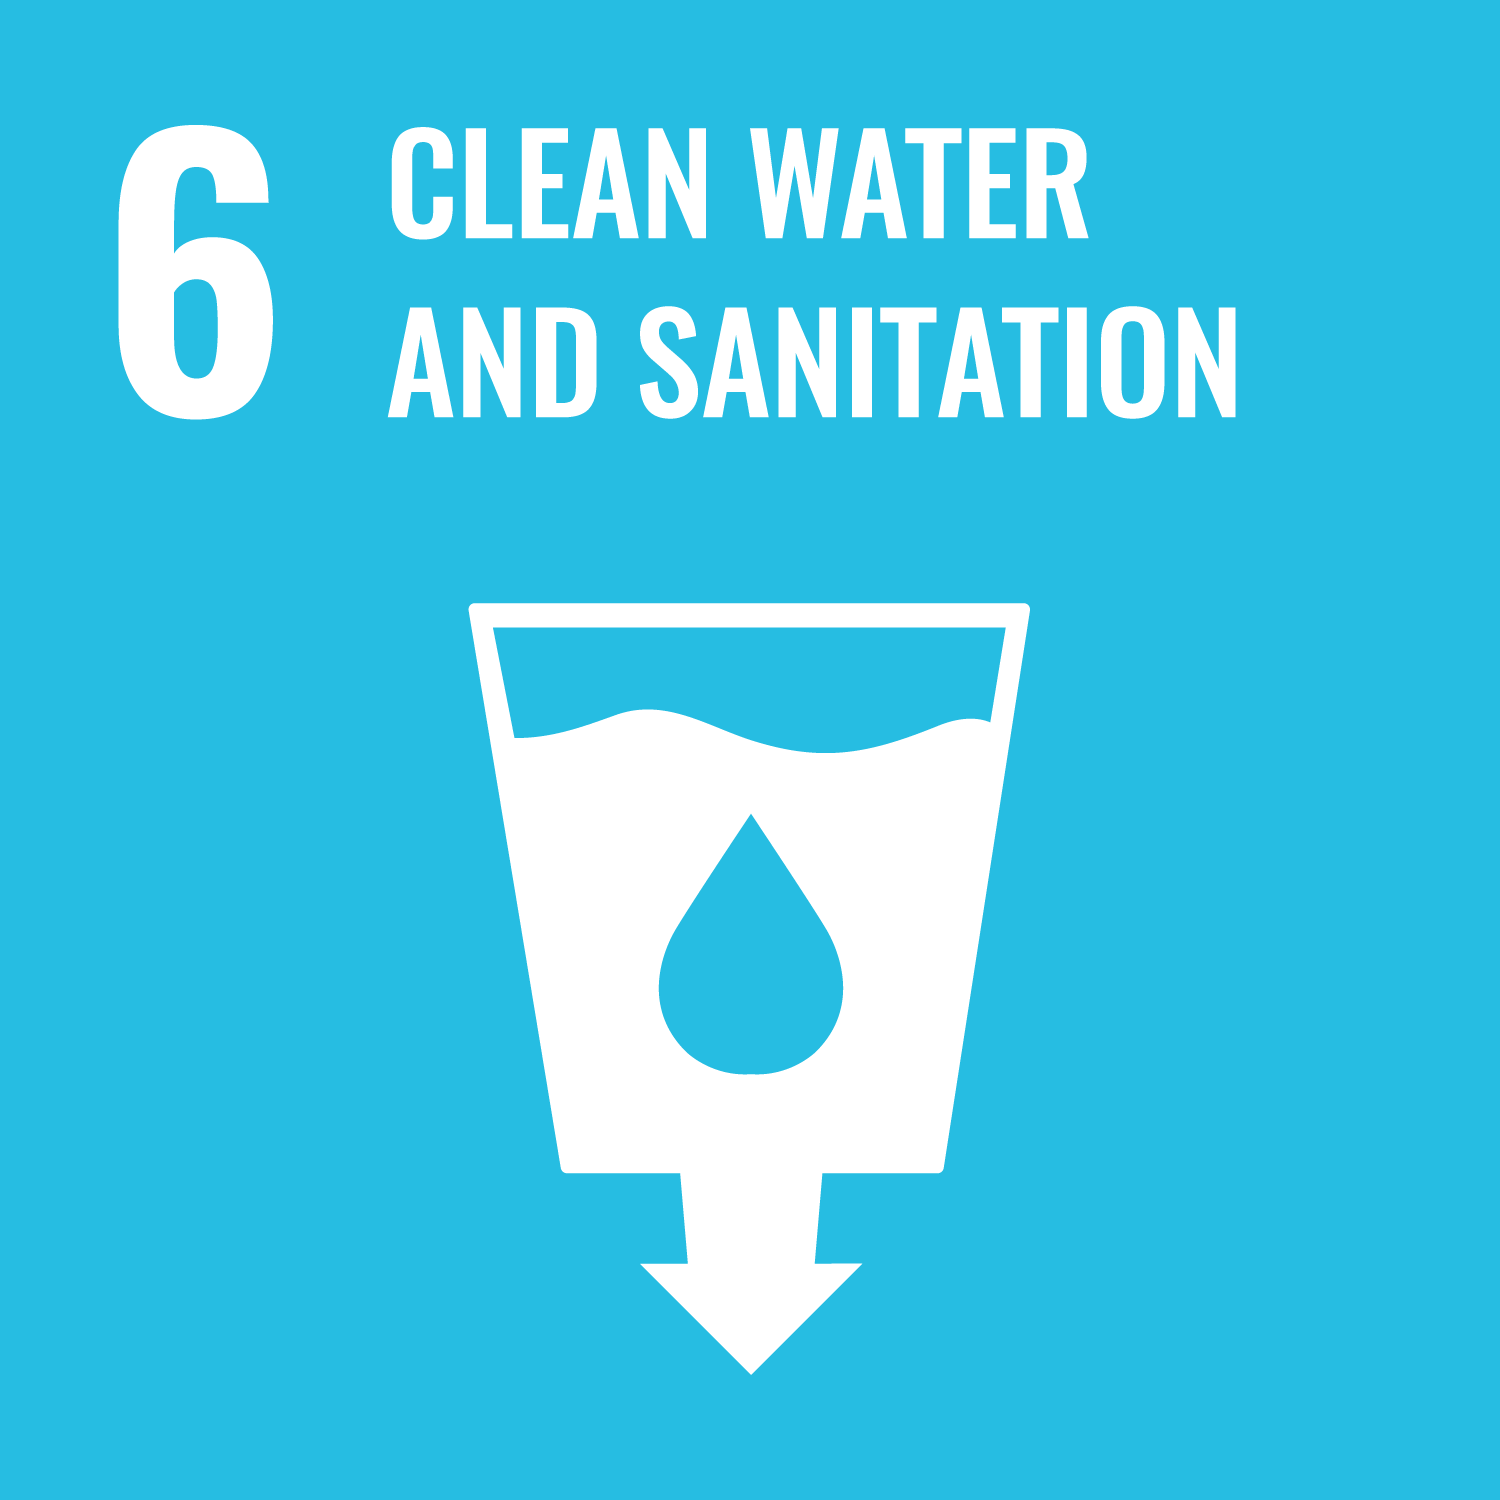 SDG 6: Clean water and sanitation